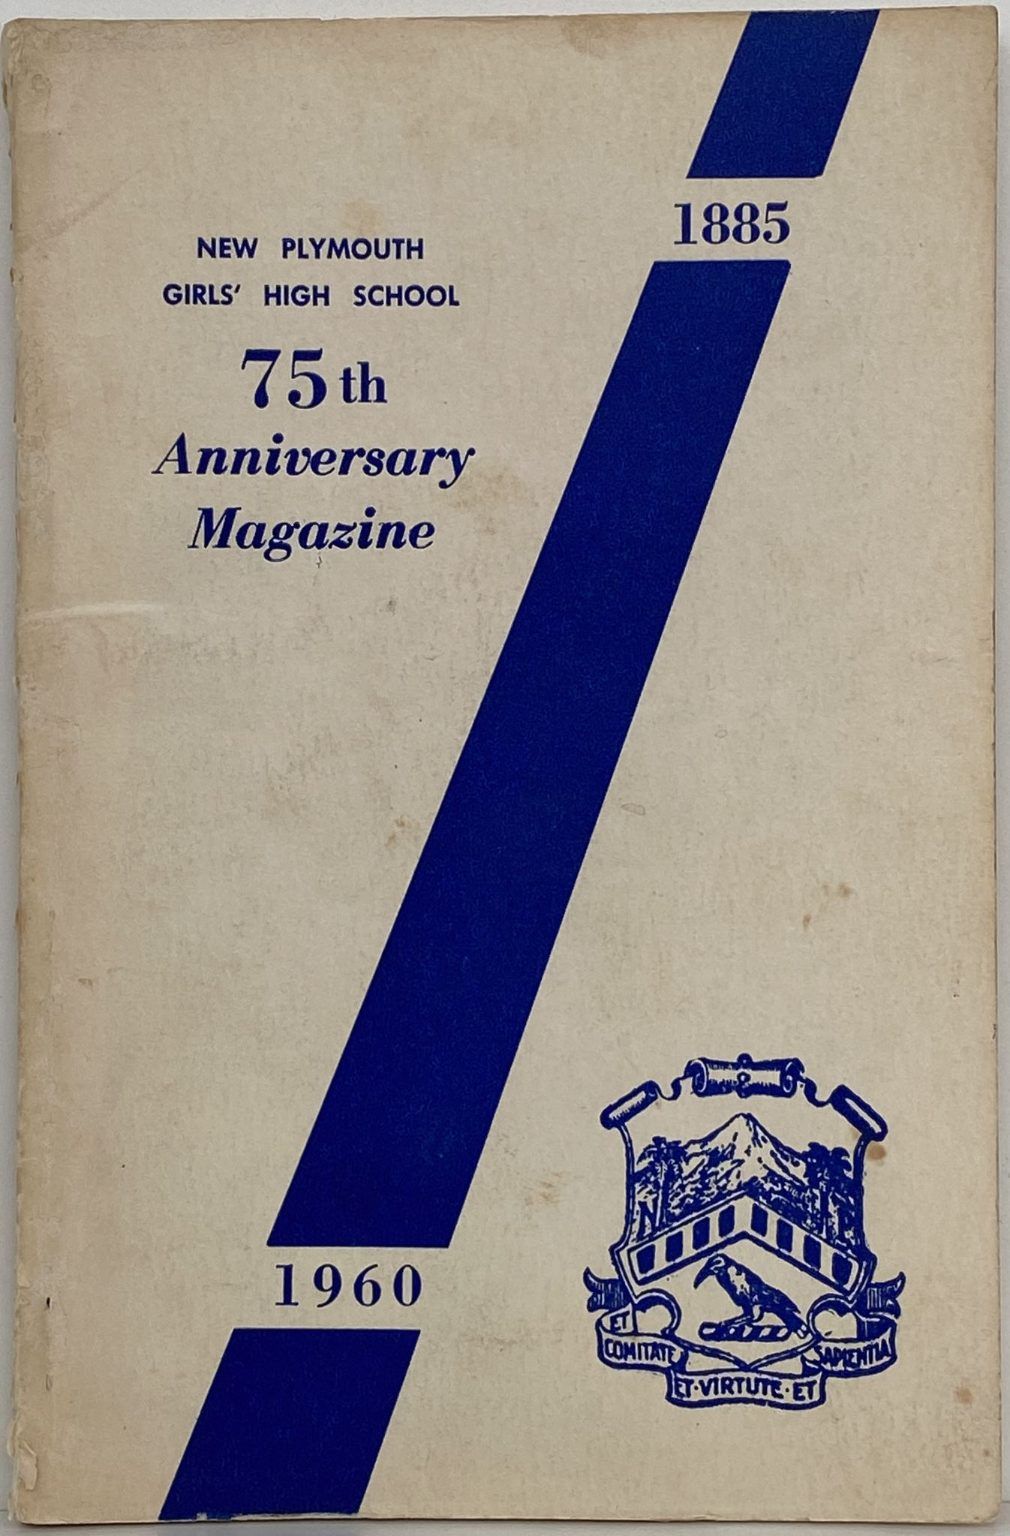 NEW PLYMOUTH GIRLS' HIGH SCHOOL: 75th Anniversary Magazine 1885-1960